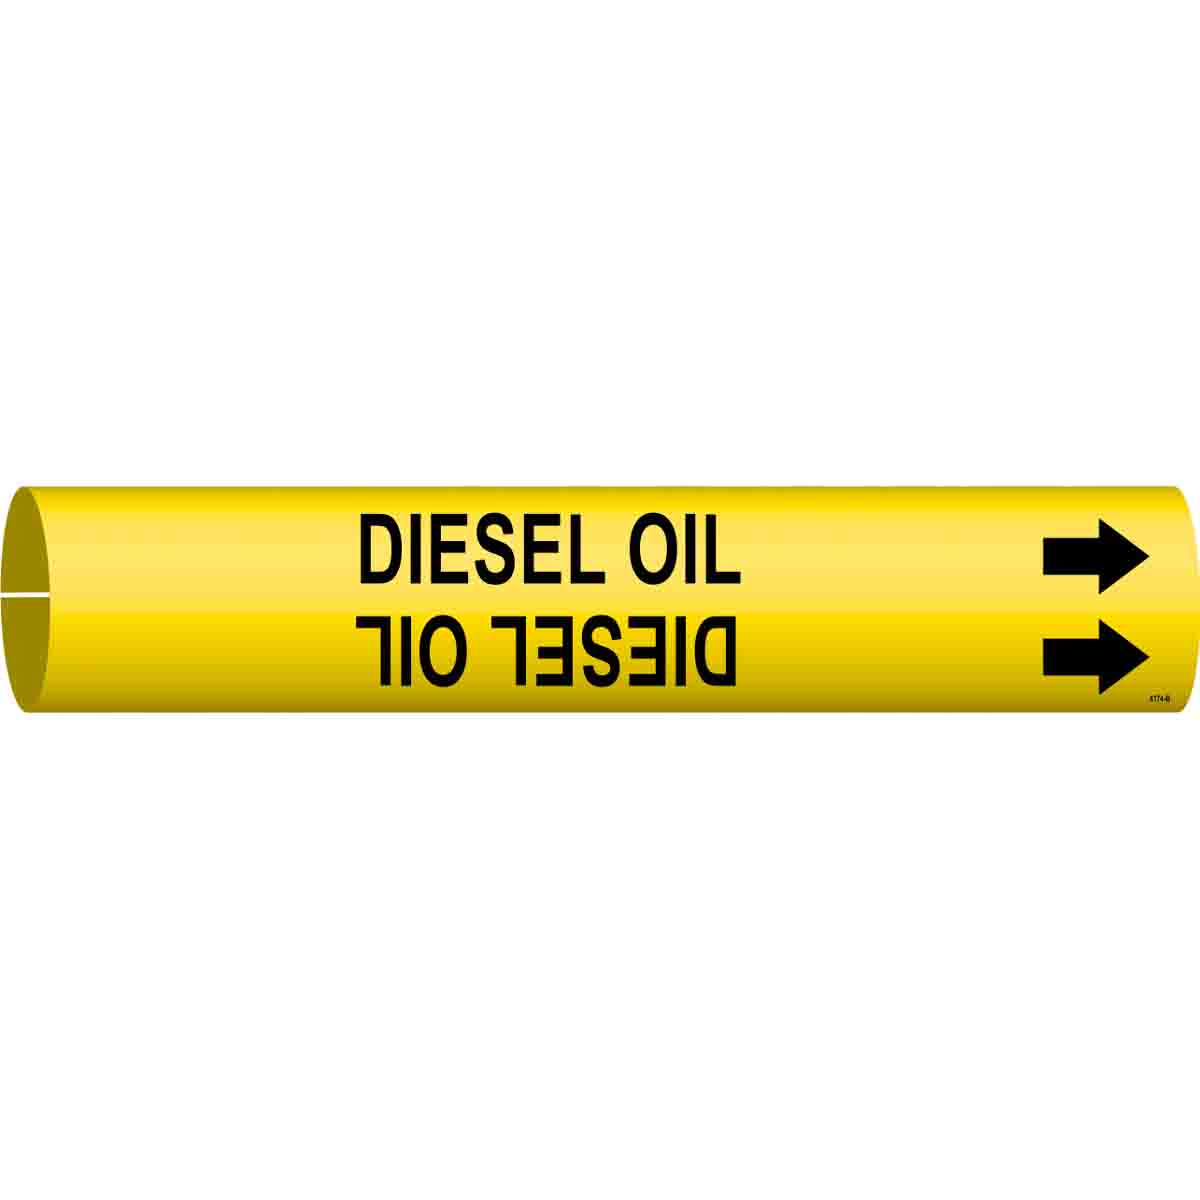 Legend Diesel Oil Brady 4174-B Bradysnap-On Pipe Marker B-915 Black On Yellow Coiled Printed Plastic Sheet 